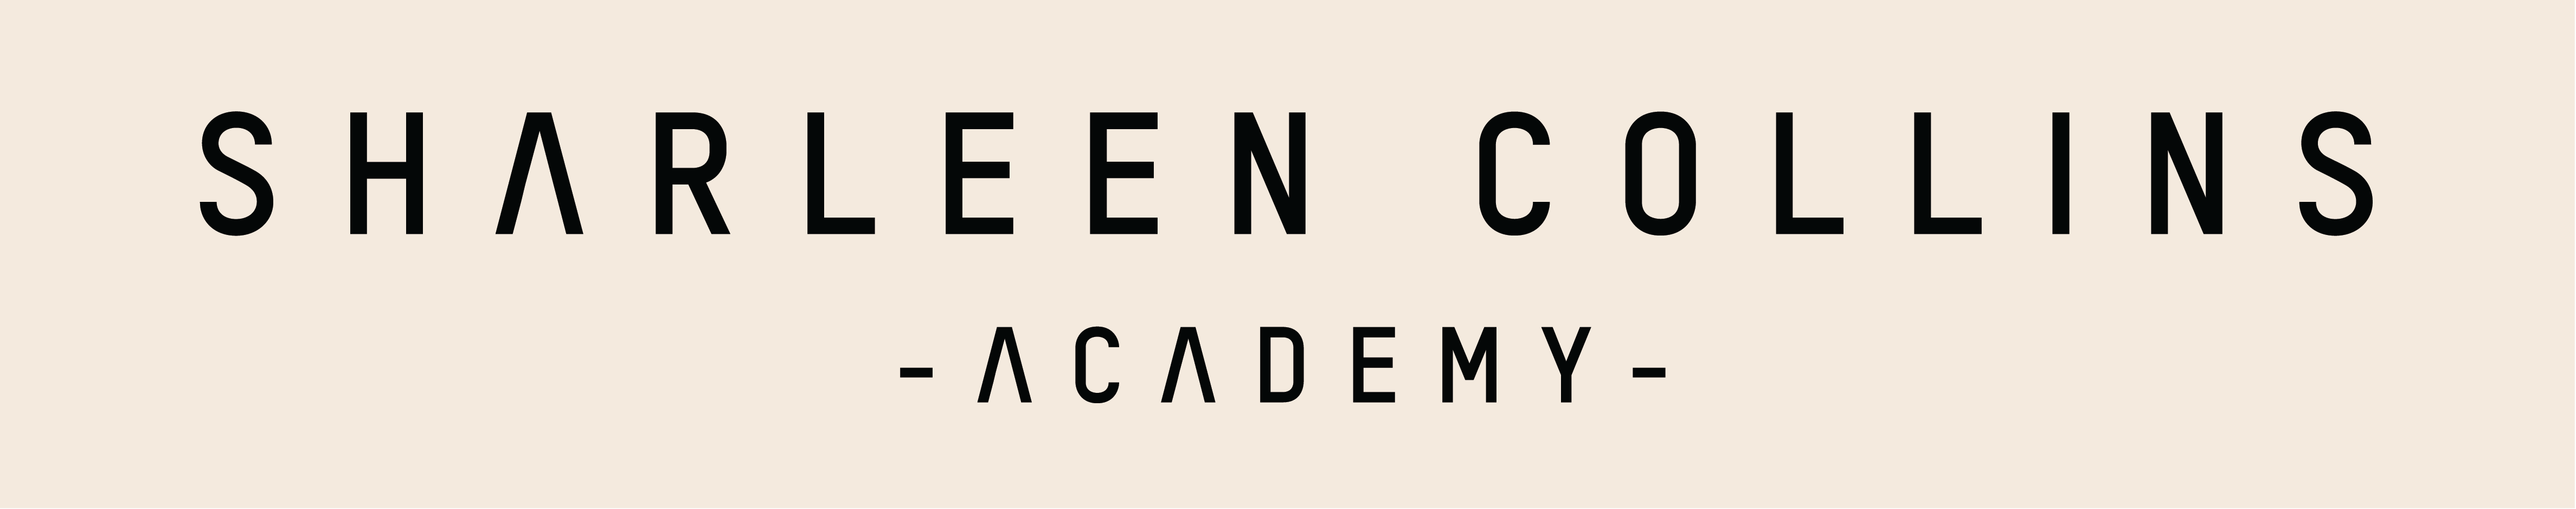 Sharleen Collins Academy Logo